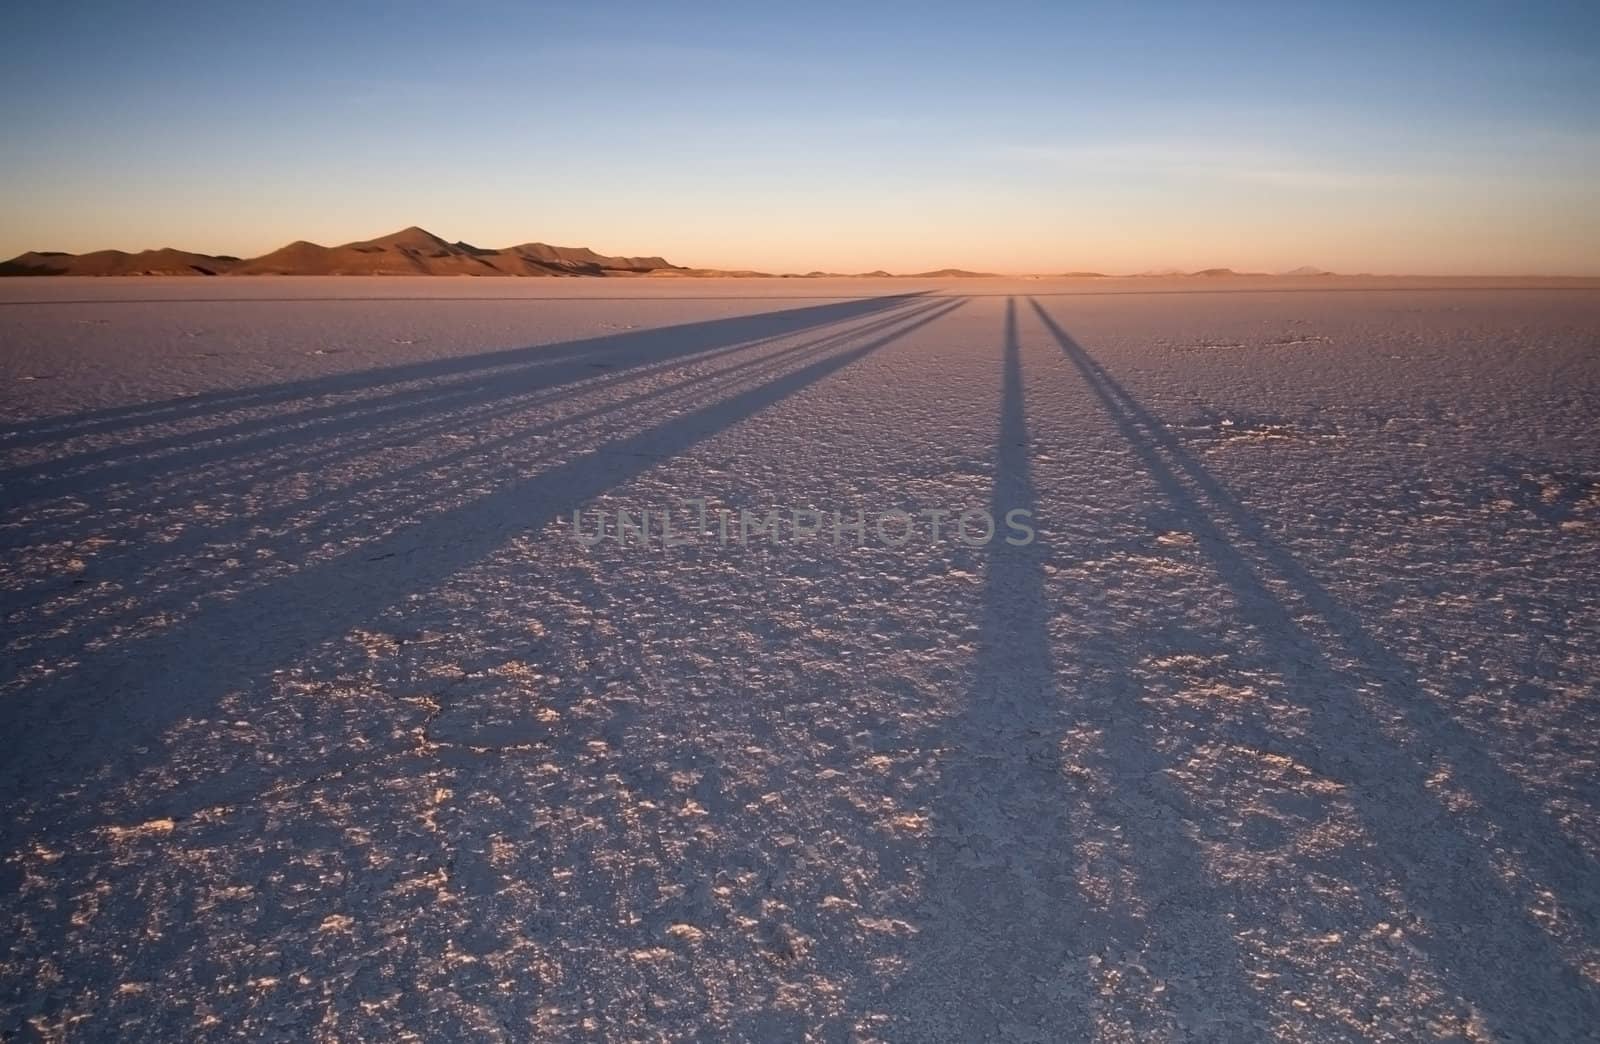 Sunrise casting magnificent shadows over the Bolivian Salt Flats.